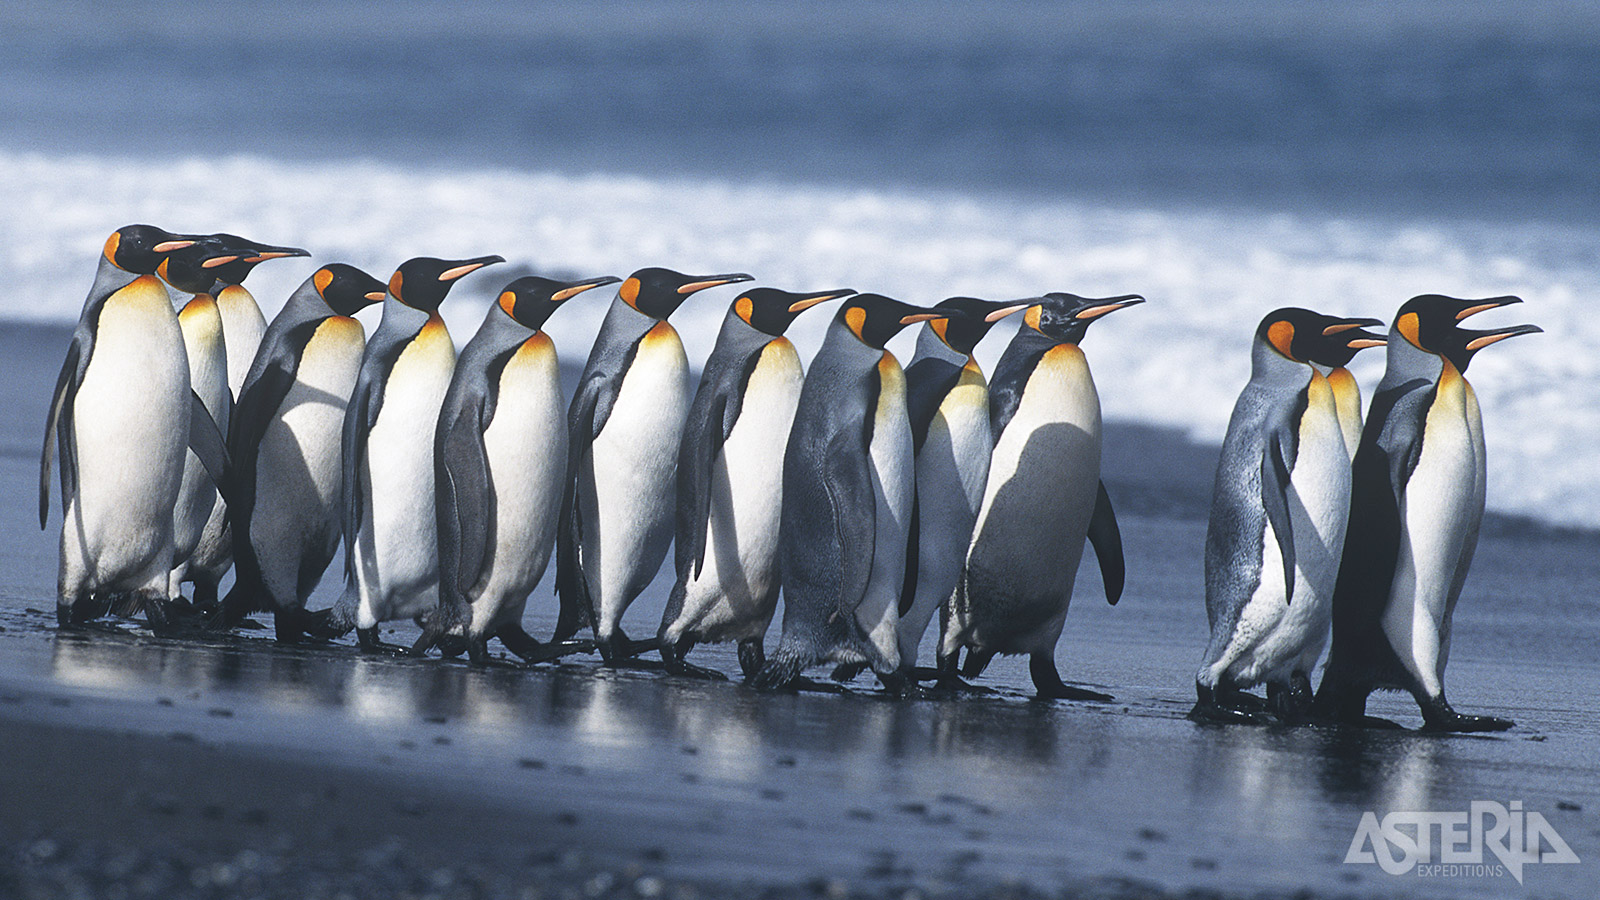 De koningspinguïn is op de keizerspinguïn na de grootste pinguïnsoort en wordt tot 100cm groot